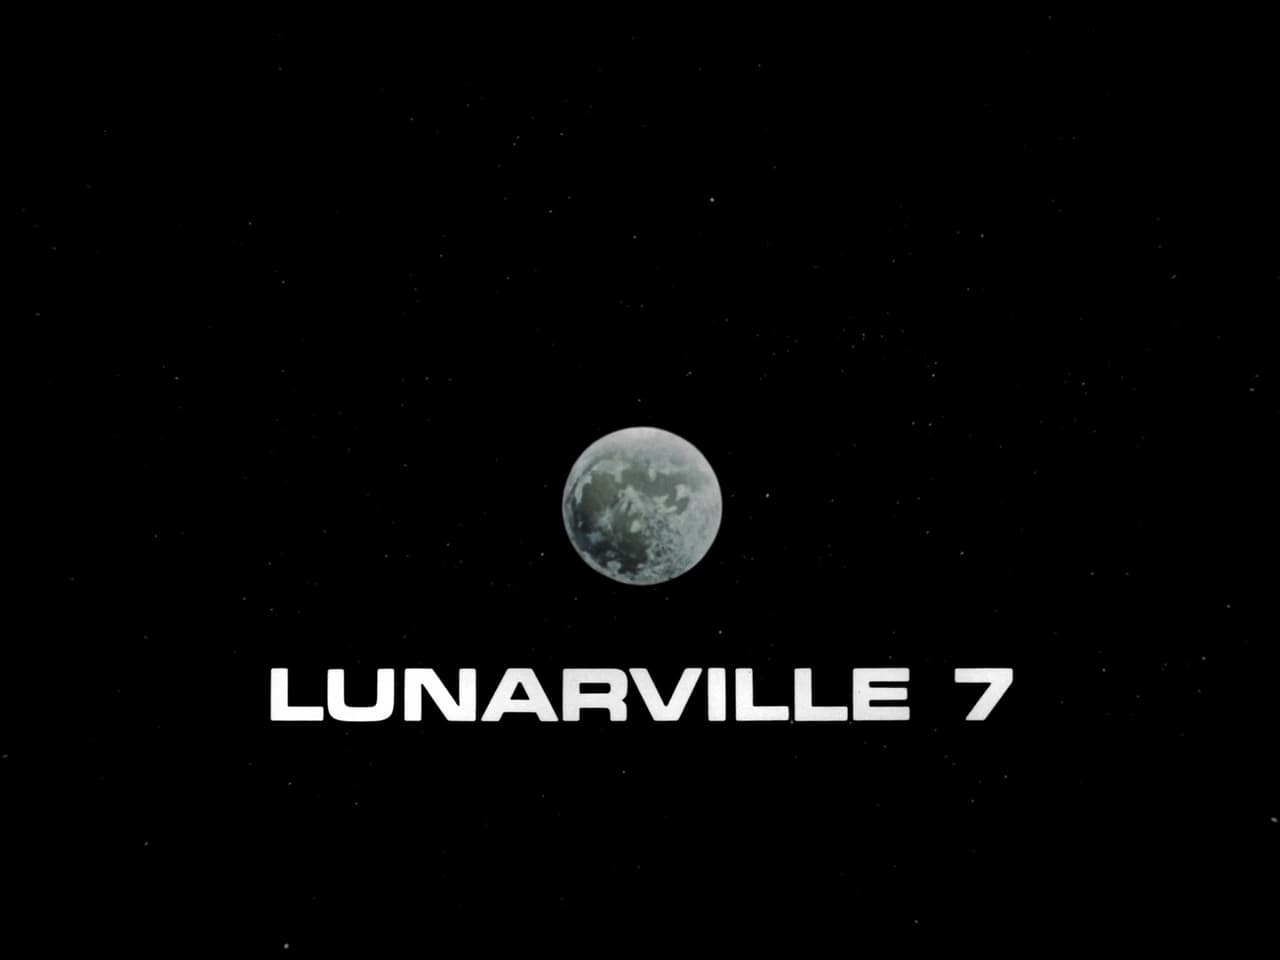 Lunarville 7